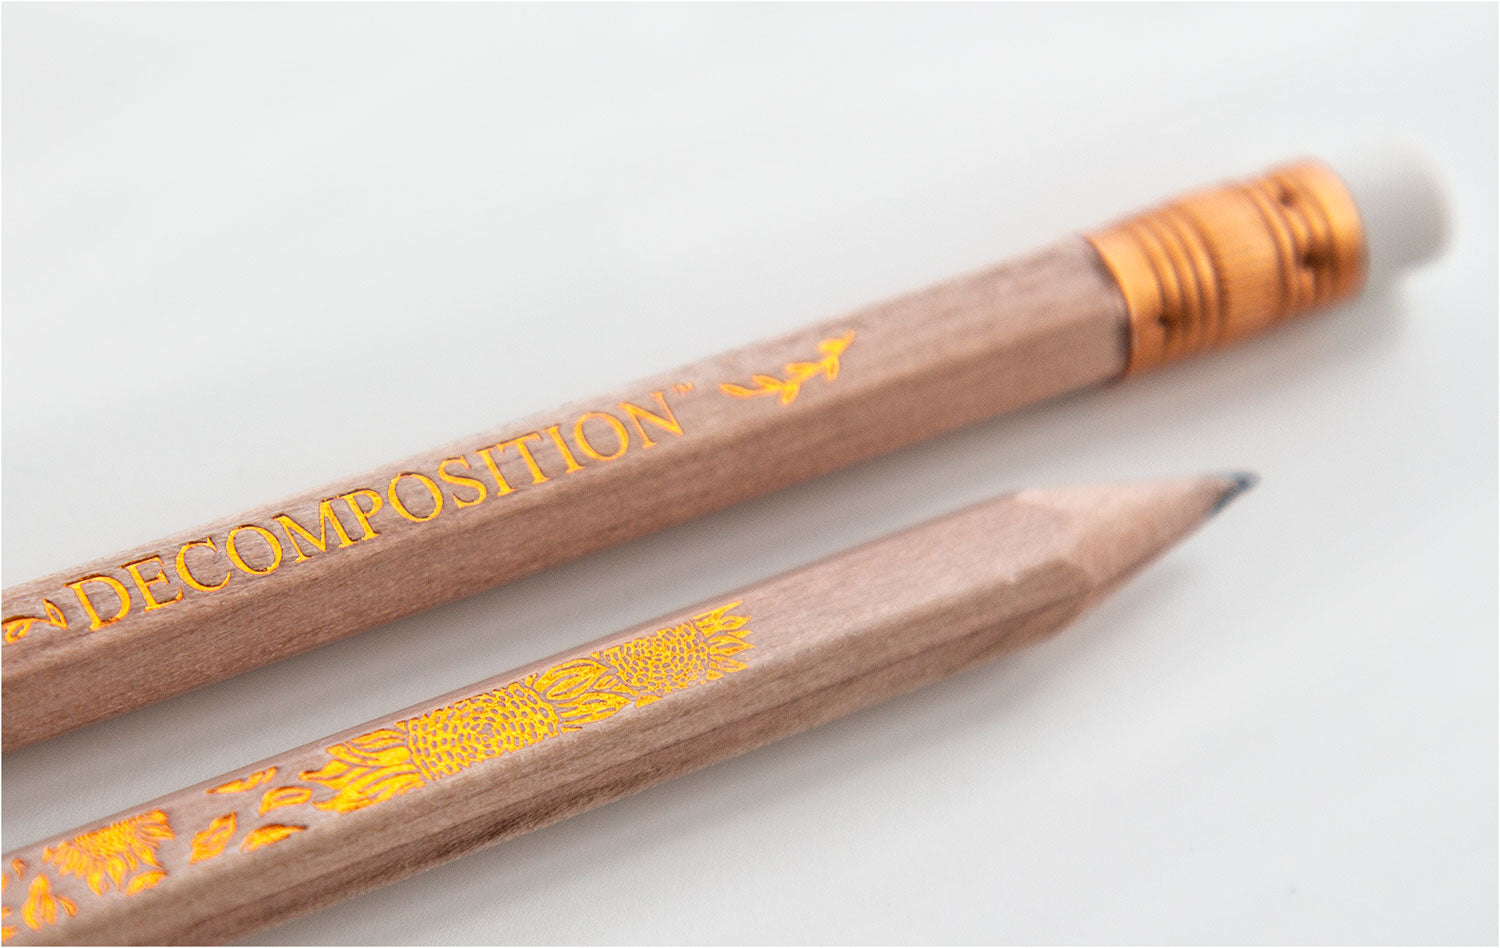 Closeup of sharpened wooden pencils